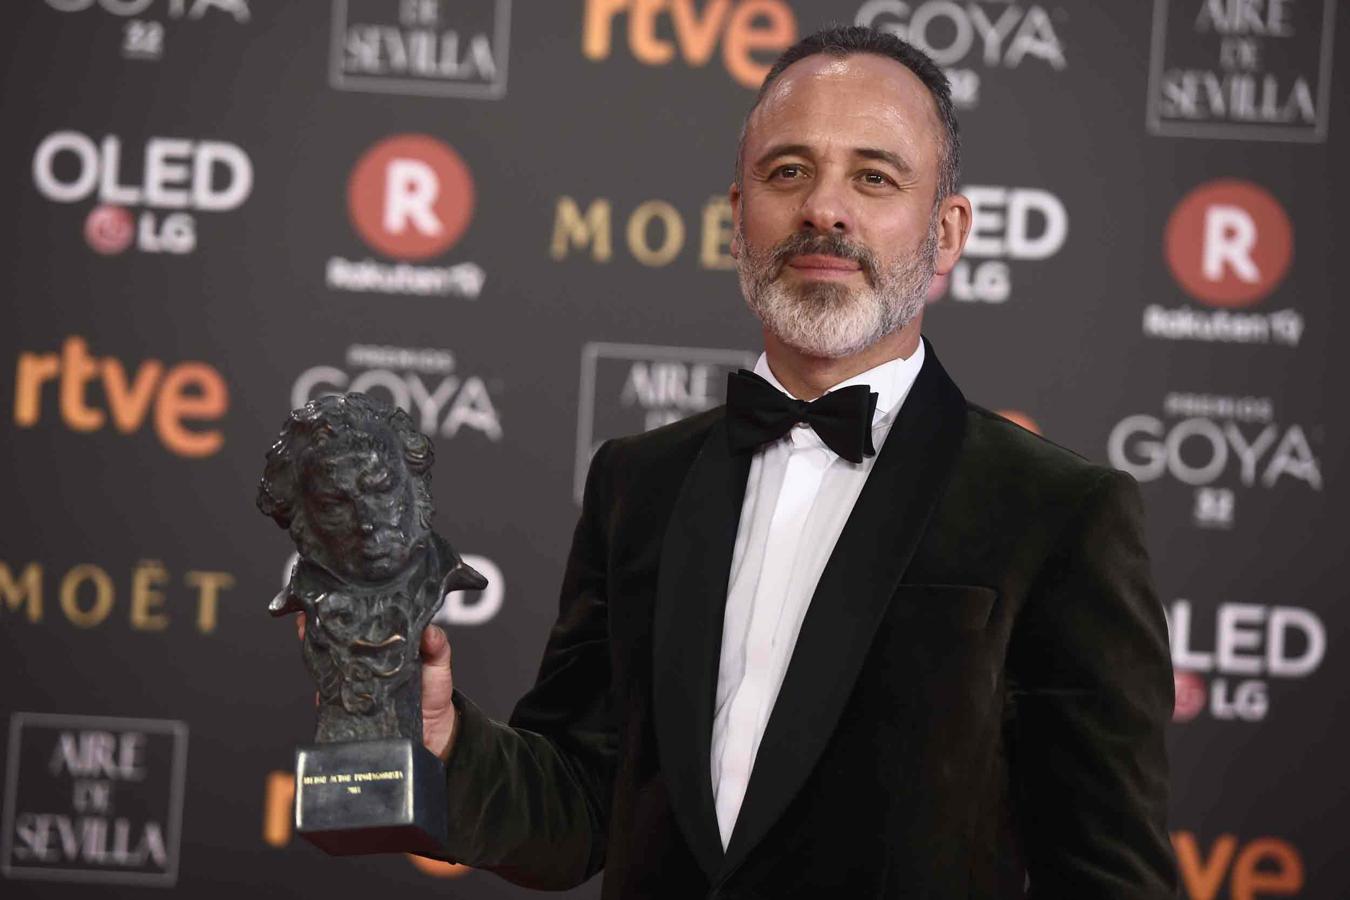 Ganadores Premios Goya 2018: Javier Gutiérrez